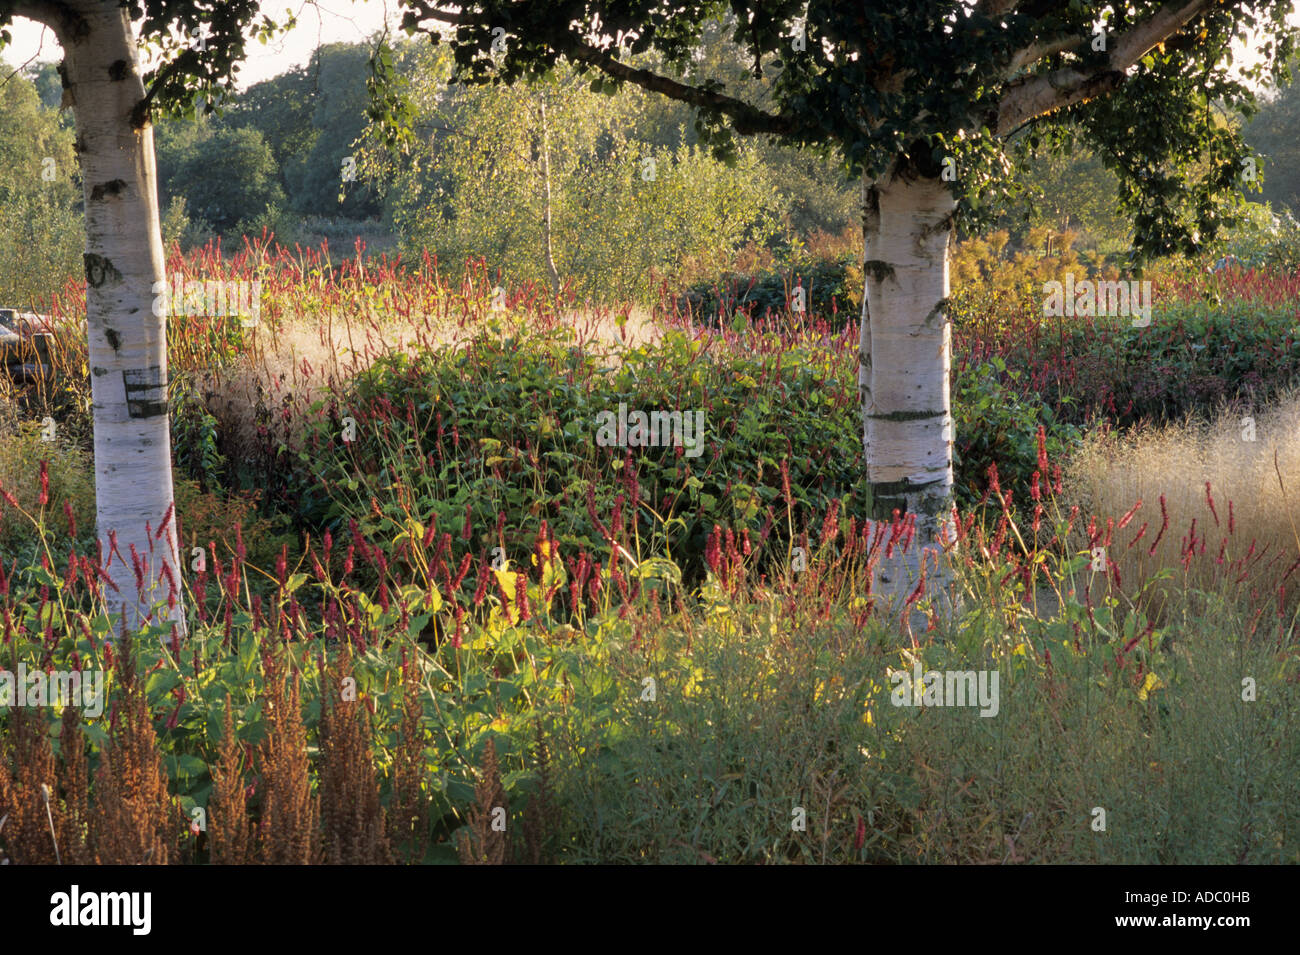 Betula trees, Persicaria, Grasses, Pensthorpe Millenium Garden, Norfolk, designer Piet Oudolf ,Autumn Stock Photo